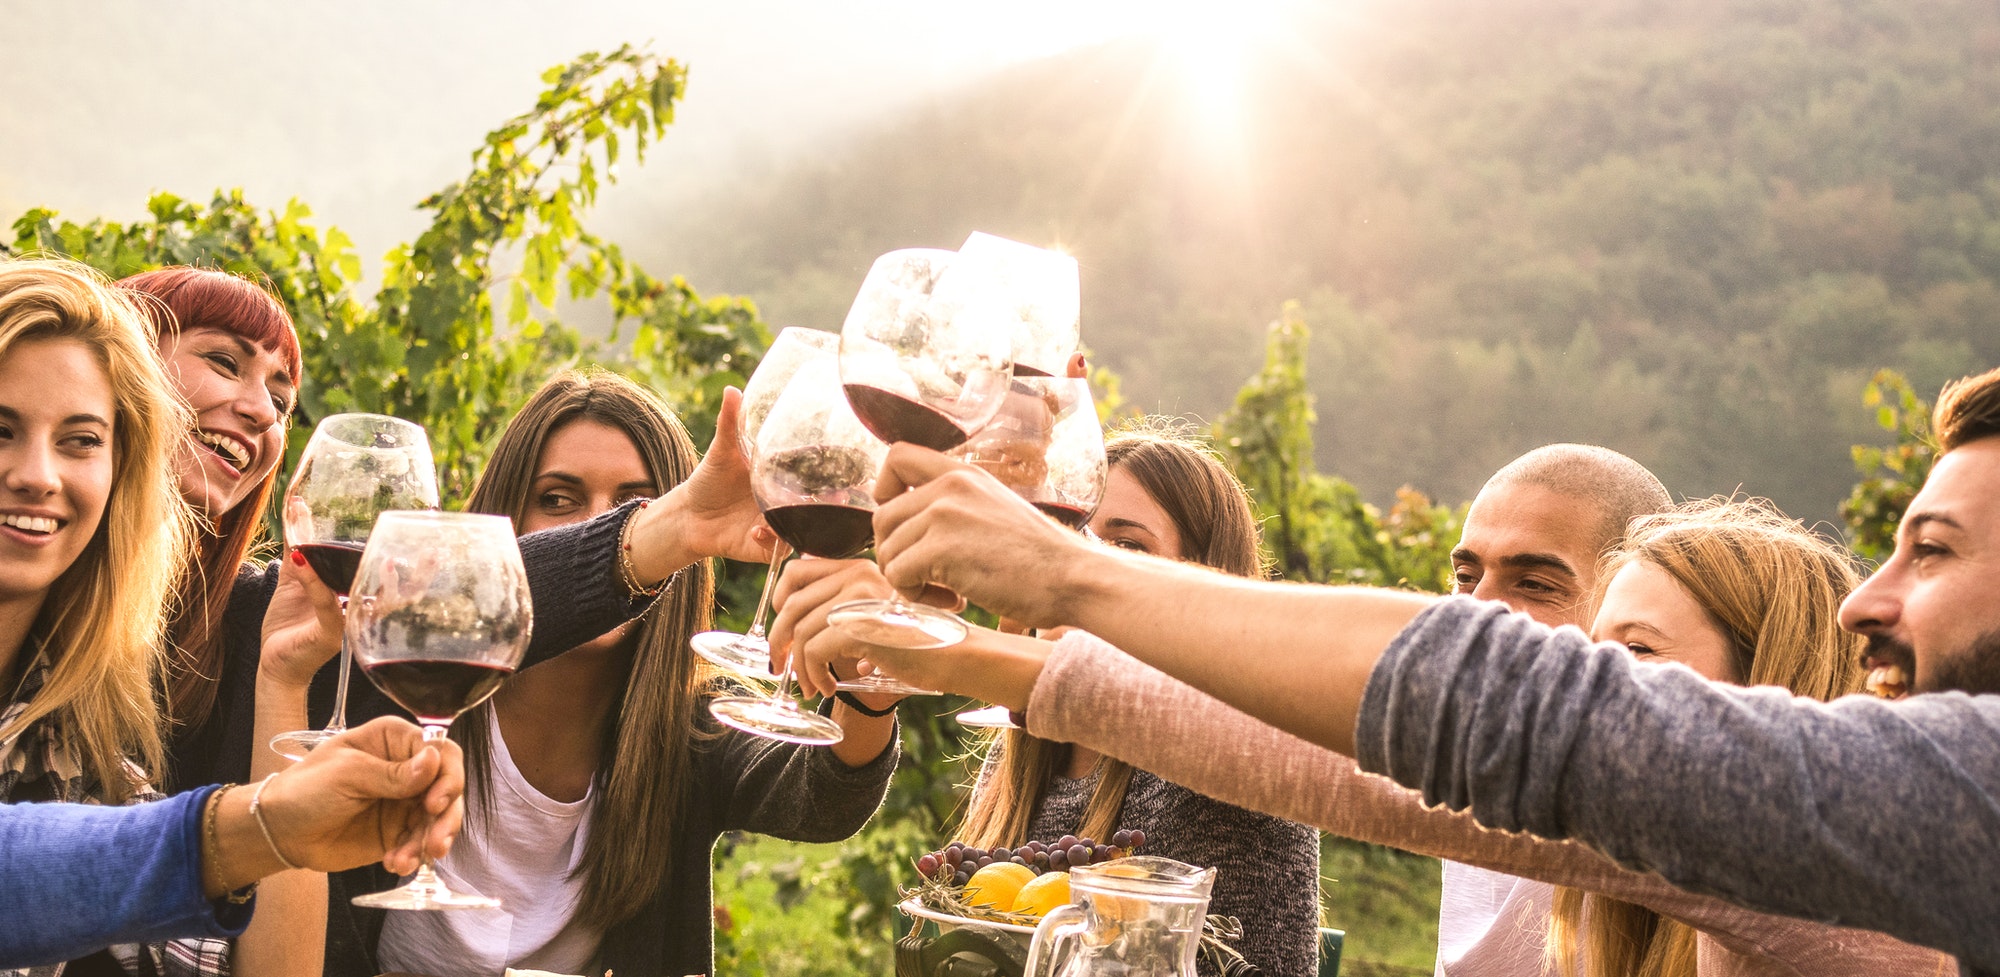 People toasting wine at vineyard picnic